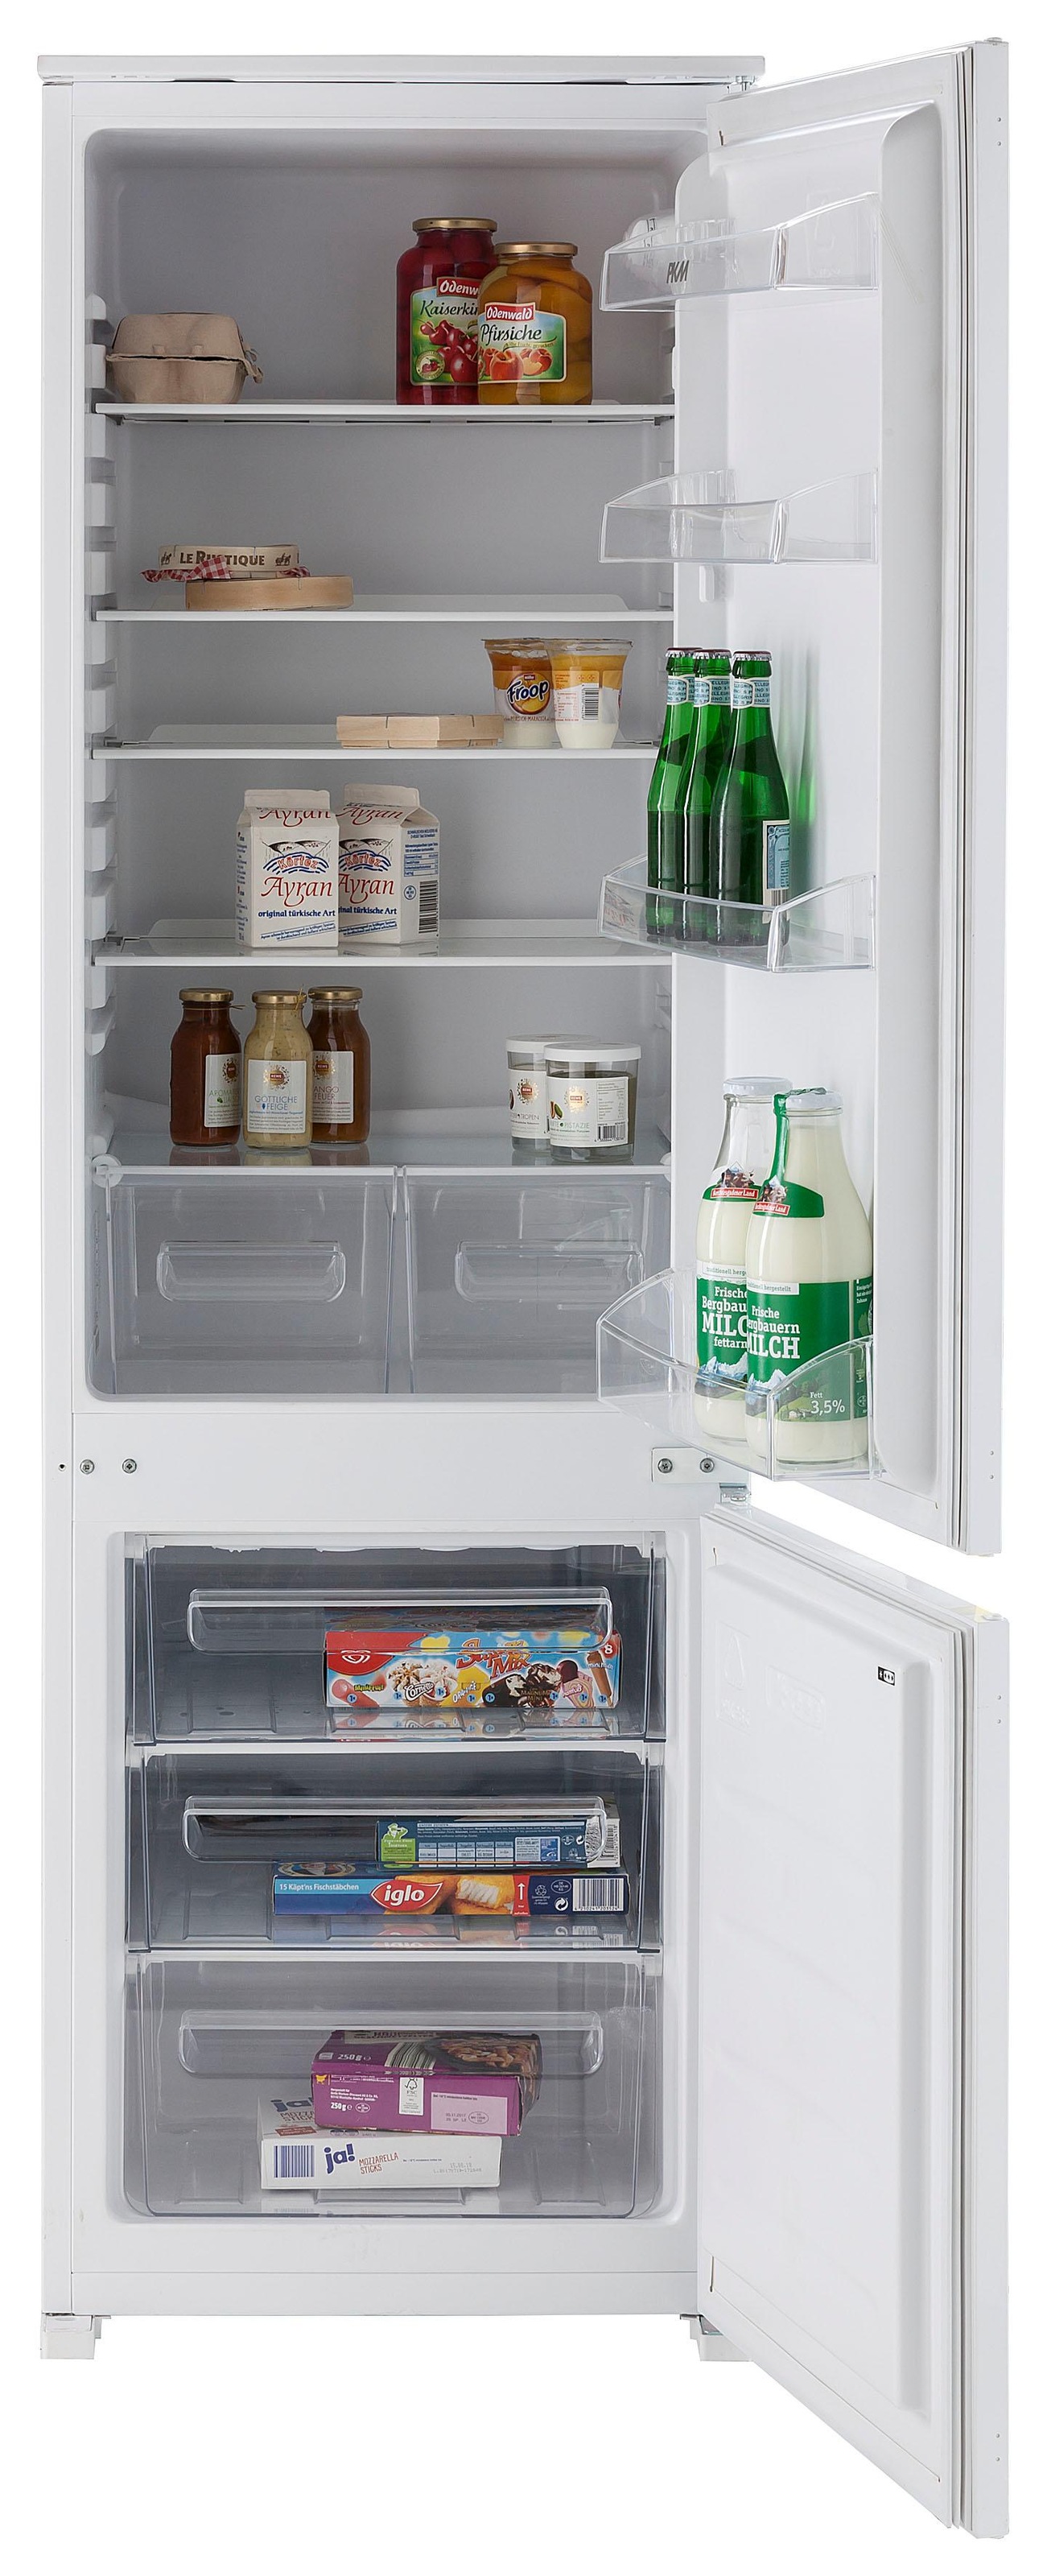 %Sale Winkelküche Kühlschrank mit Winkel HELD Geschirrspüler u. x inkl. MÖBEL »Visby«, 180cm im jetzt E-Geräte, 240